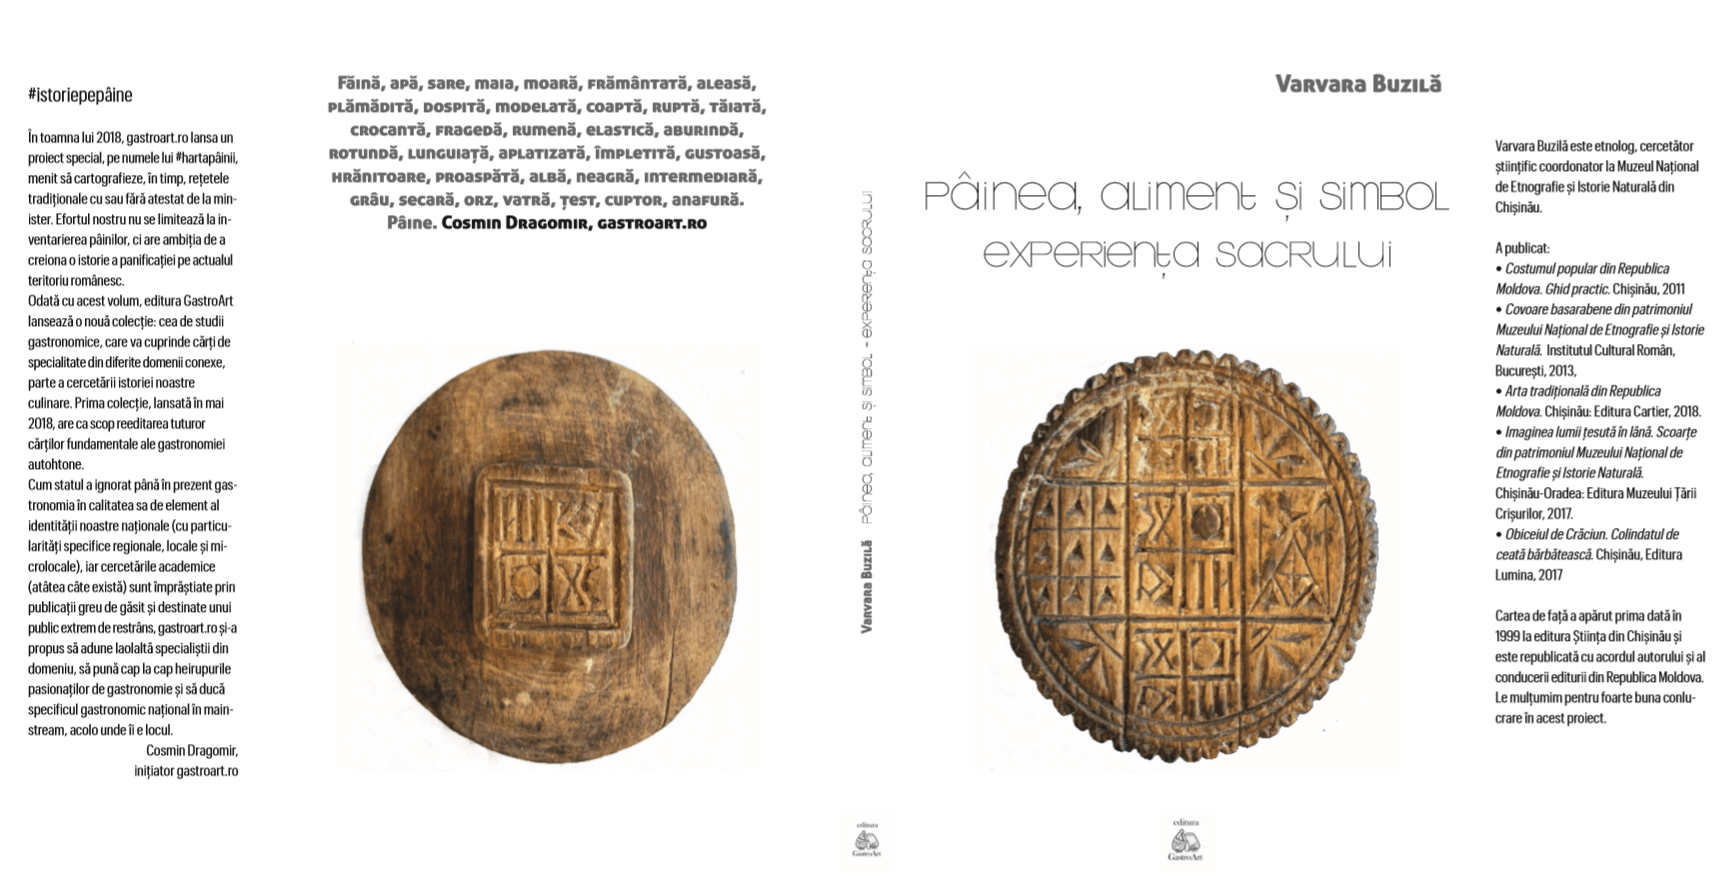 Painea, aliment si simbol de Varvara Buzila, Editura GastroArt